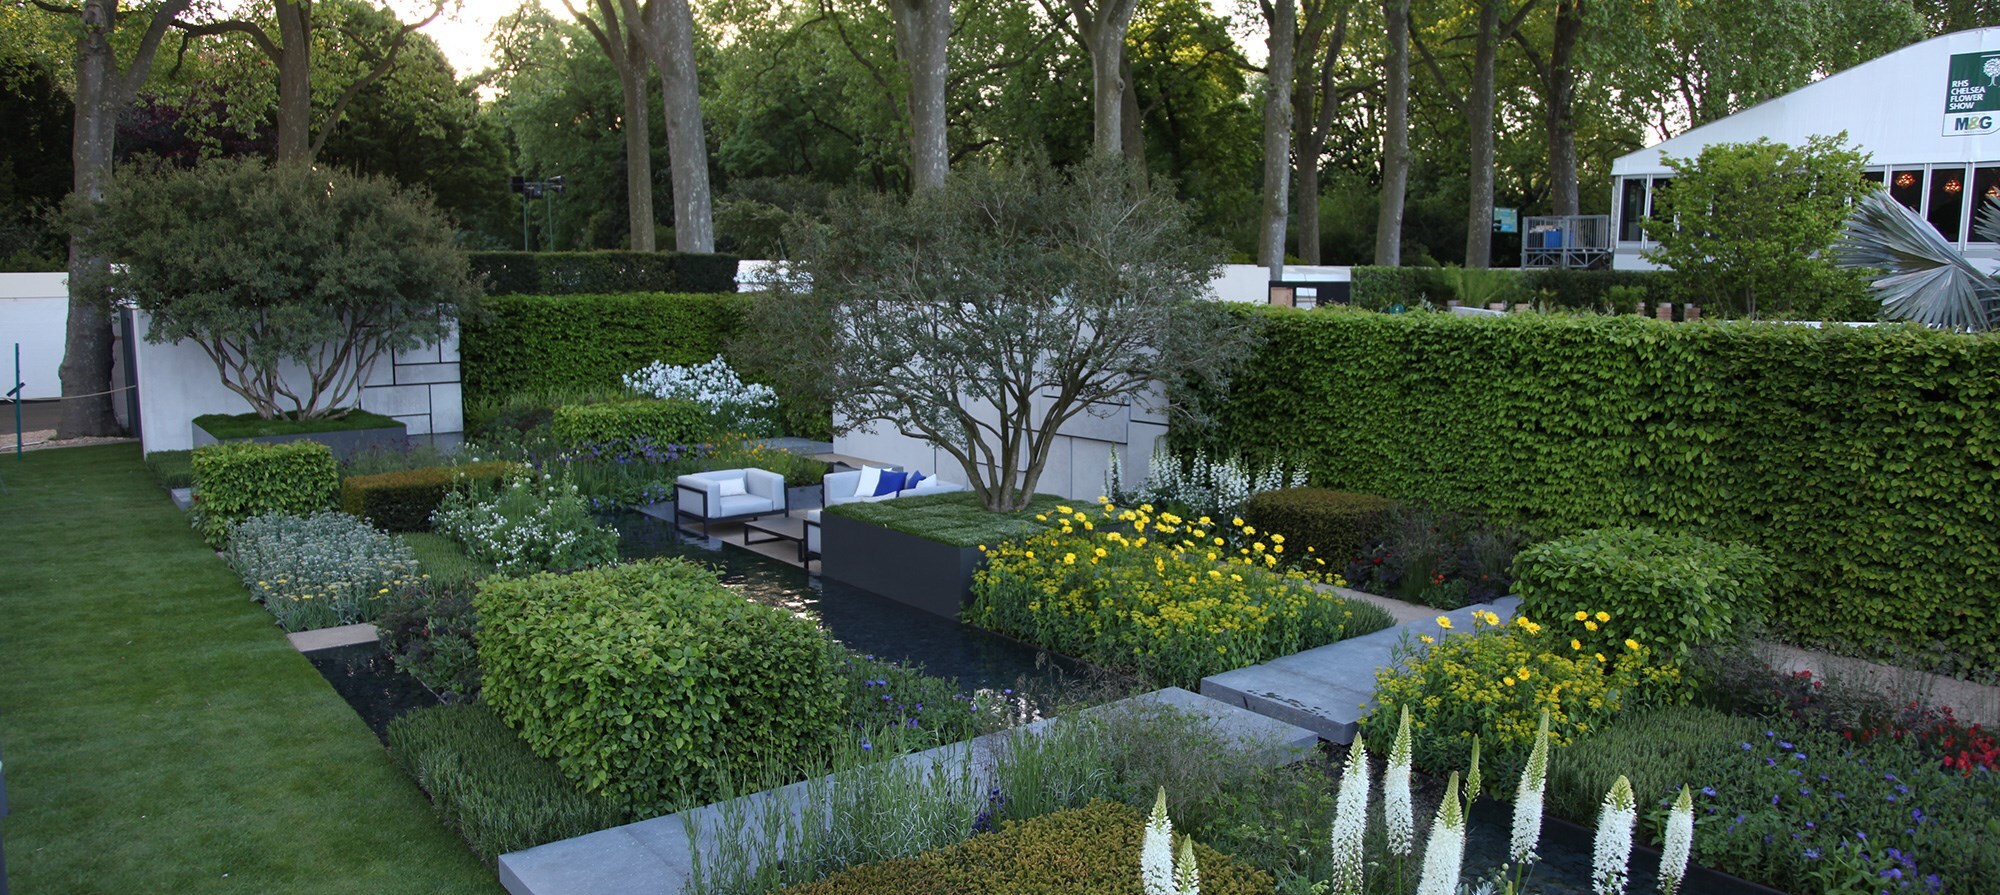 The Daily Telegraph Garden designed by Marcus Barnett